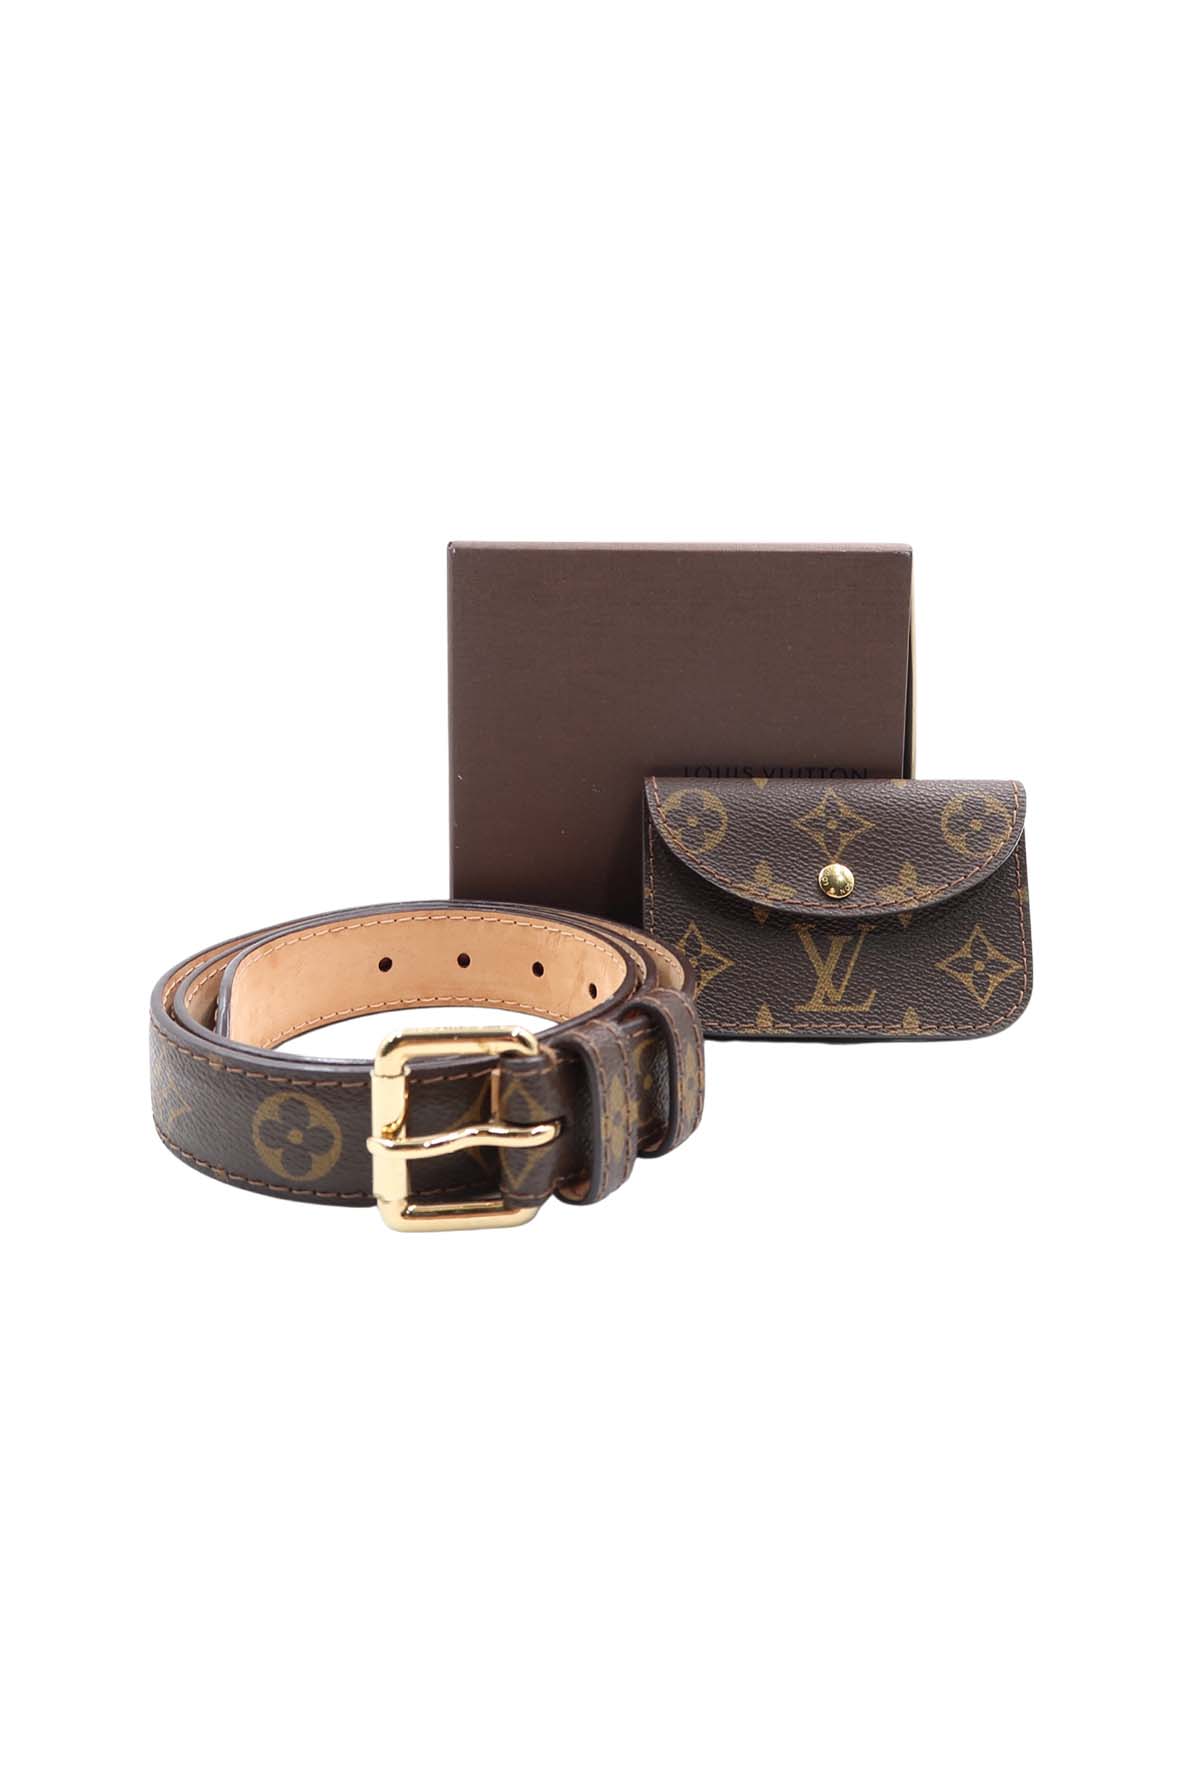 Louis Vuitton Monogram Leather Brown Belt 